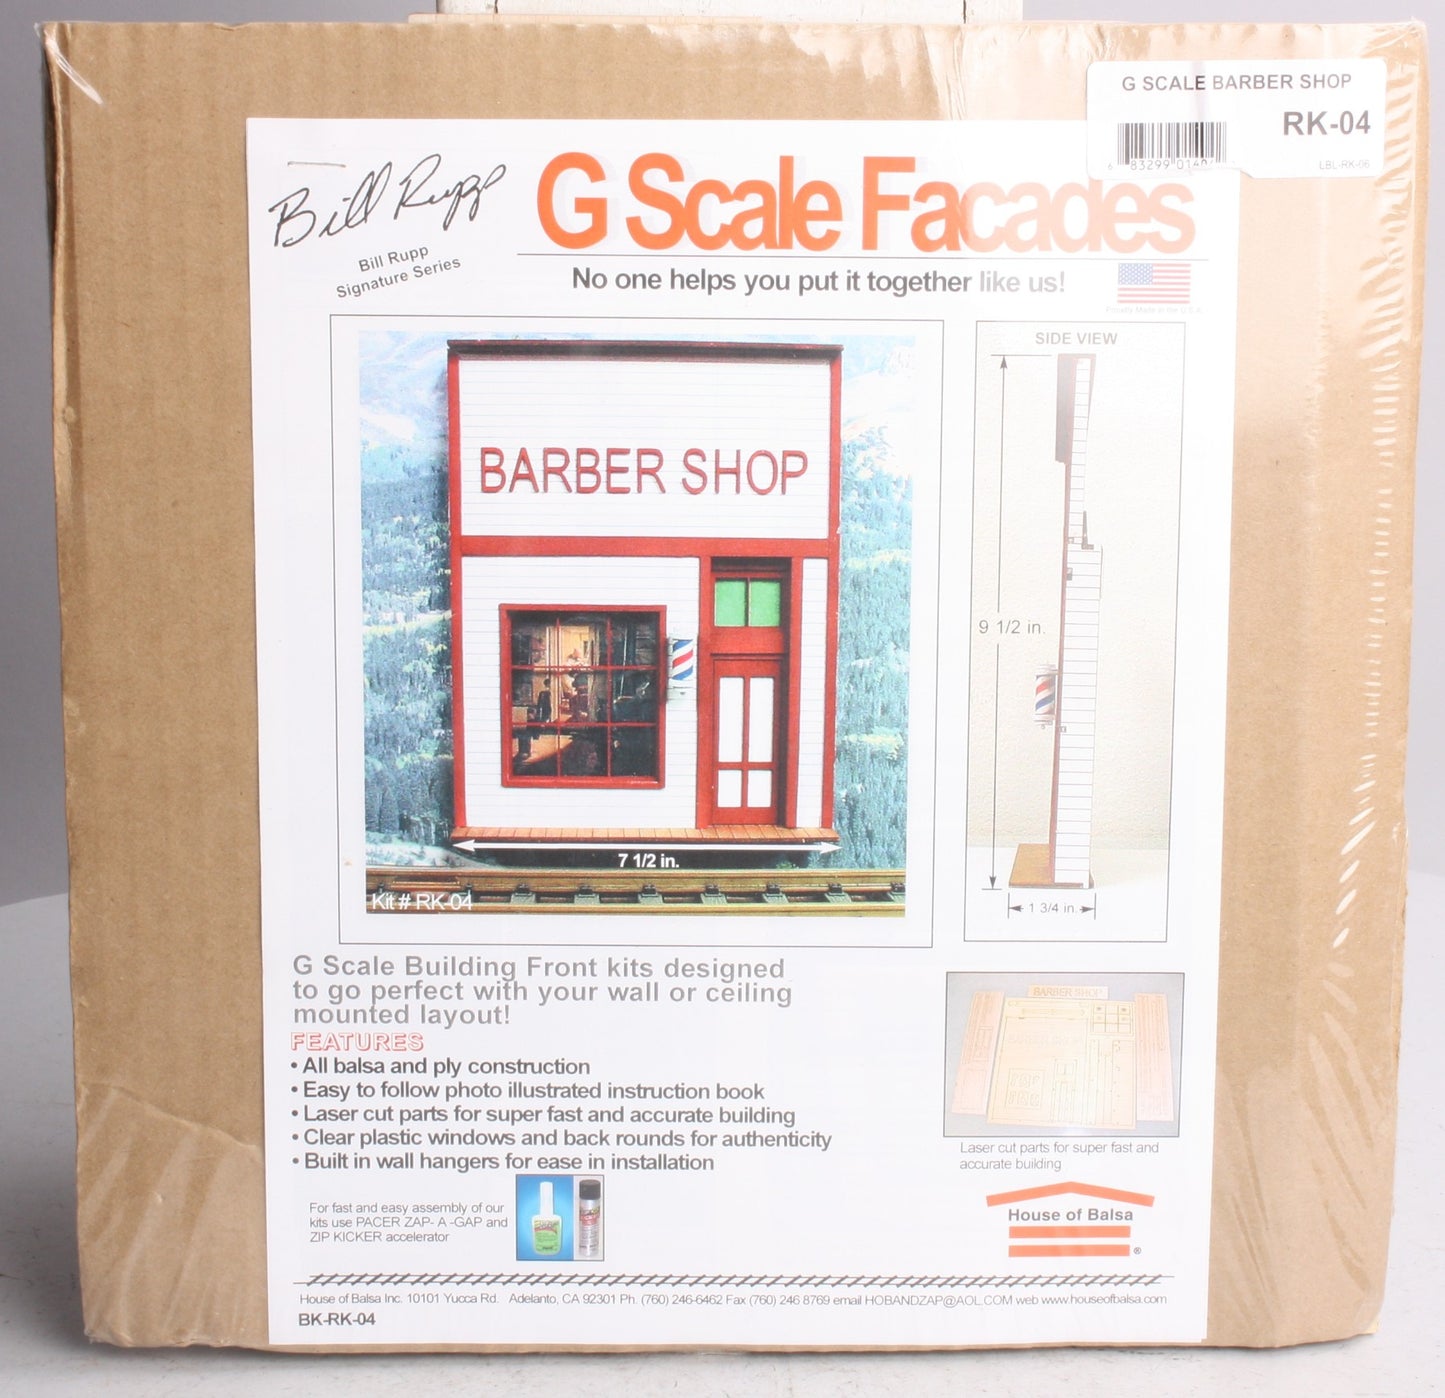 House of Balsa RK-04 "G" Scale Facades "Barber Shop" Kit